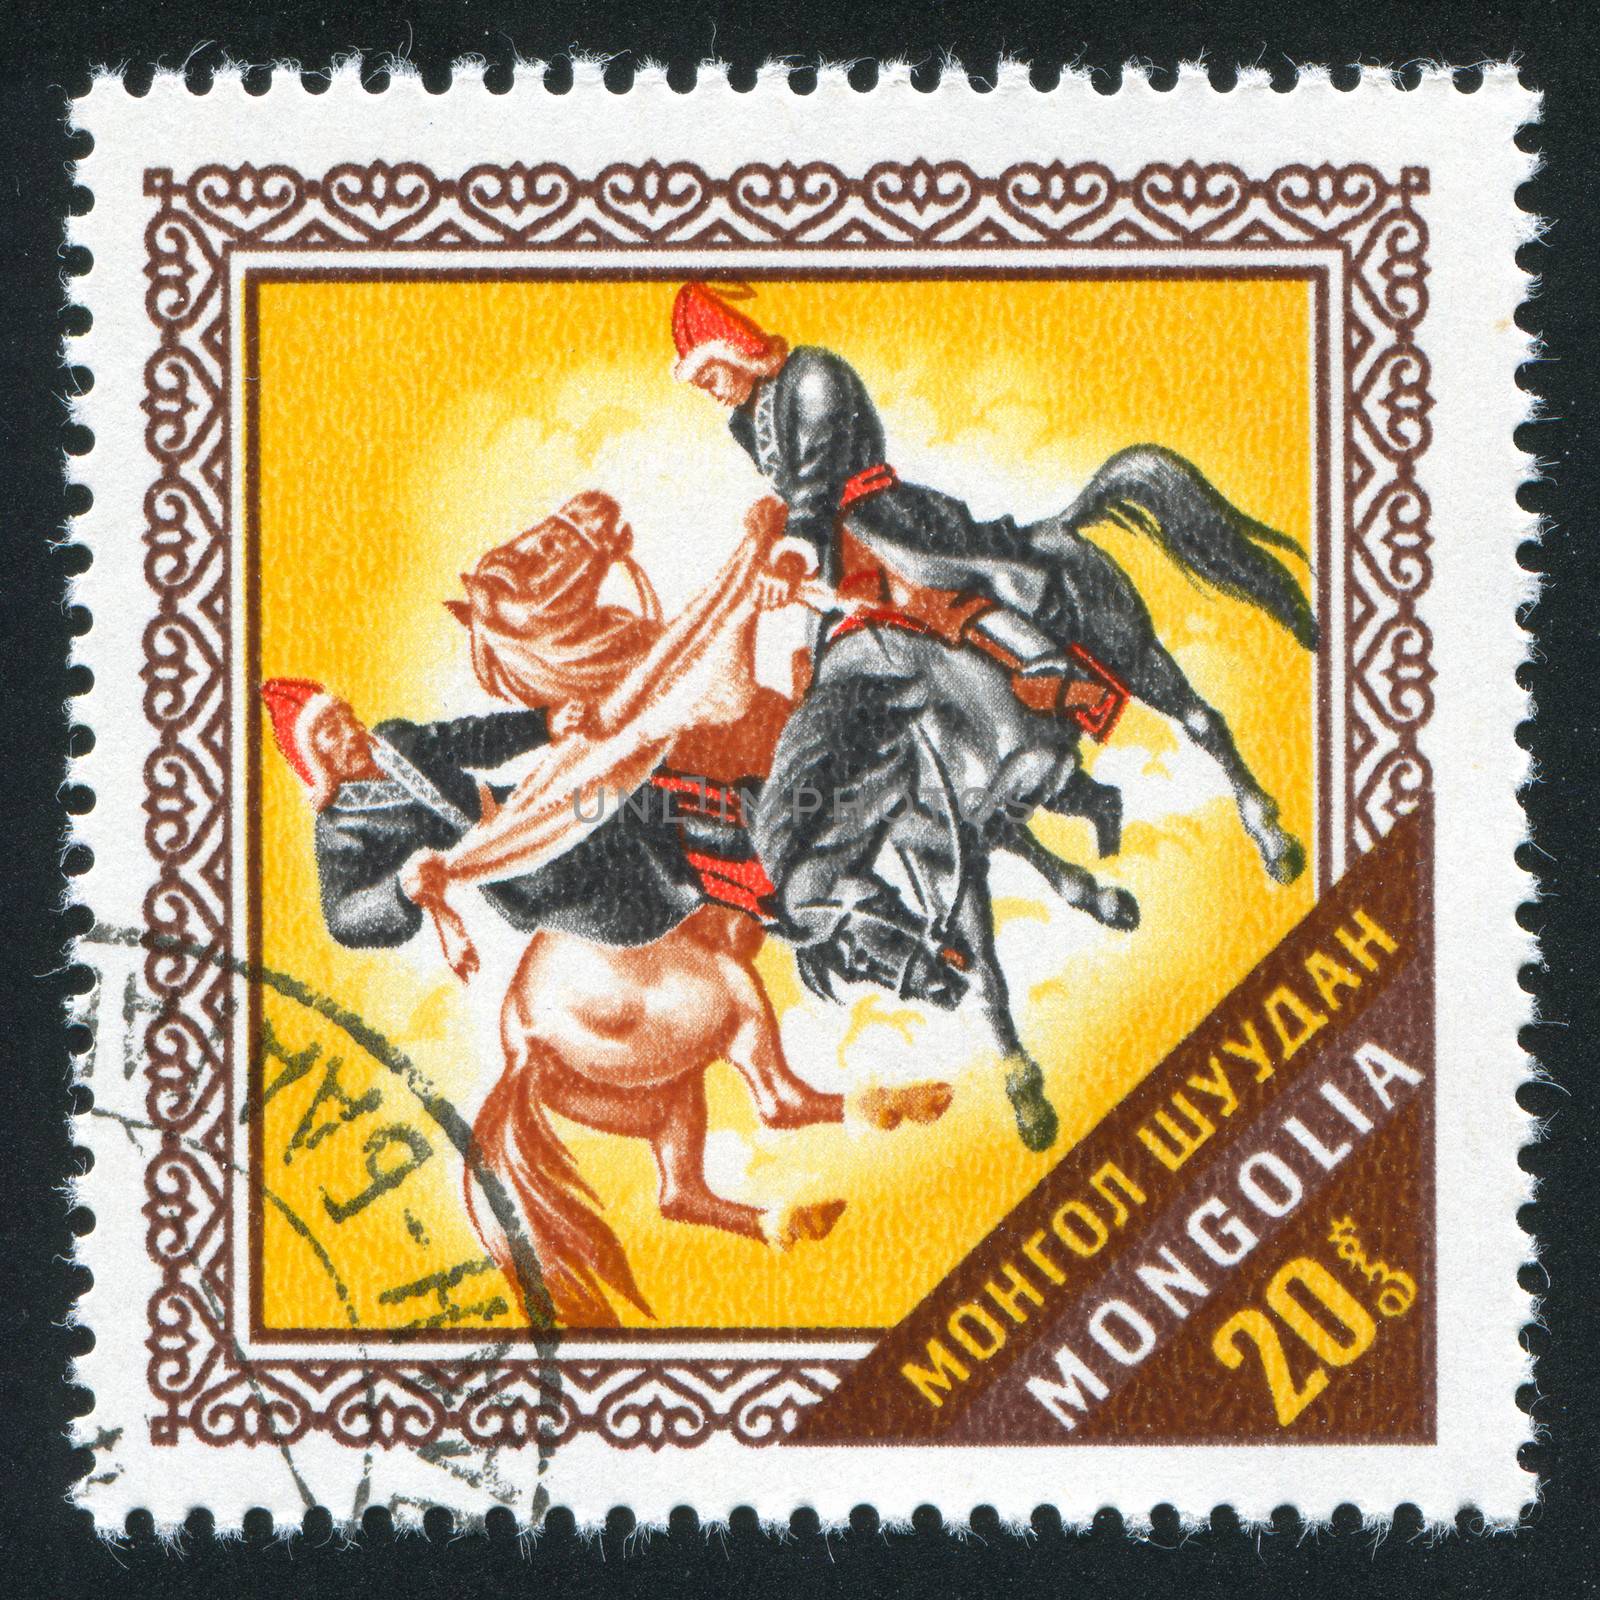 MONGOLIA - CIRCA 1974: stamp printed by Mongolia, shows Two horsemen fighting for goatskin, circa 1974